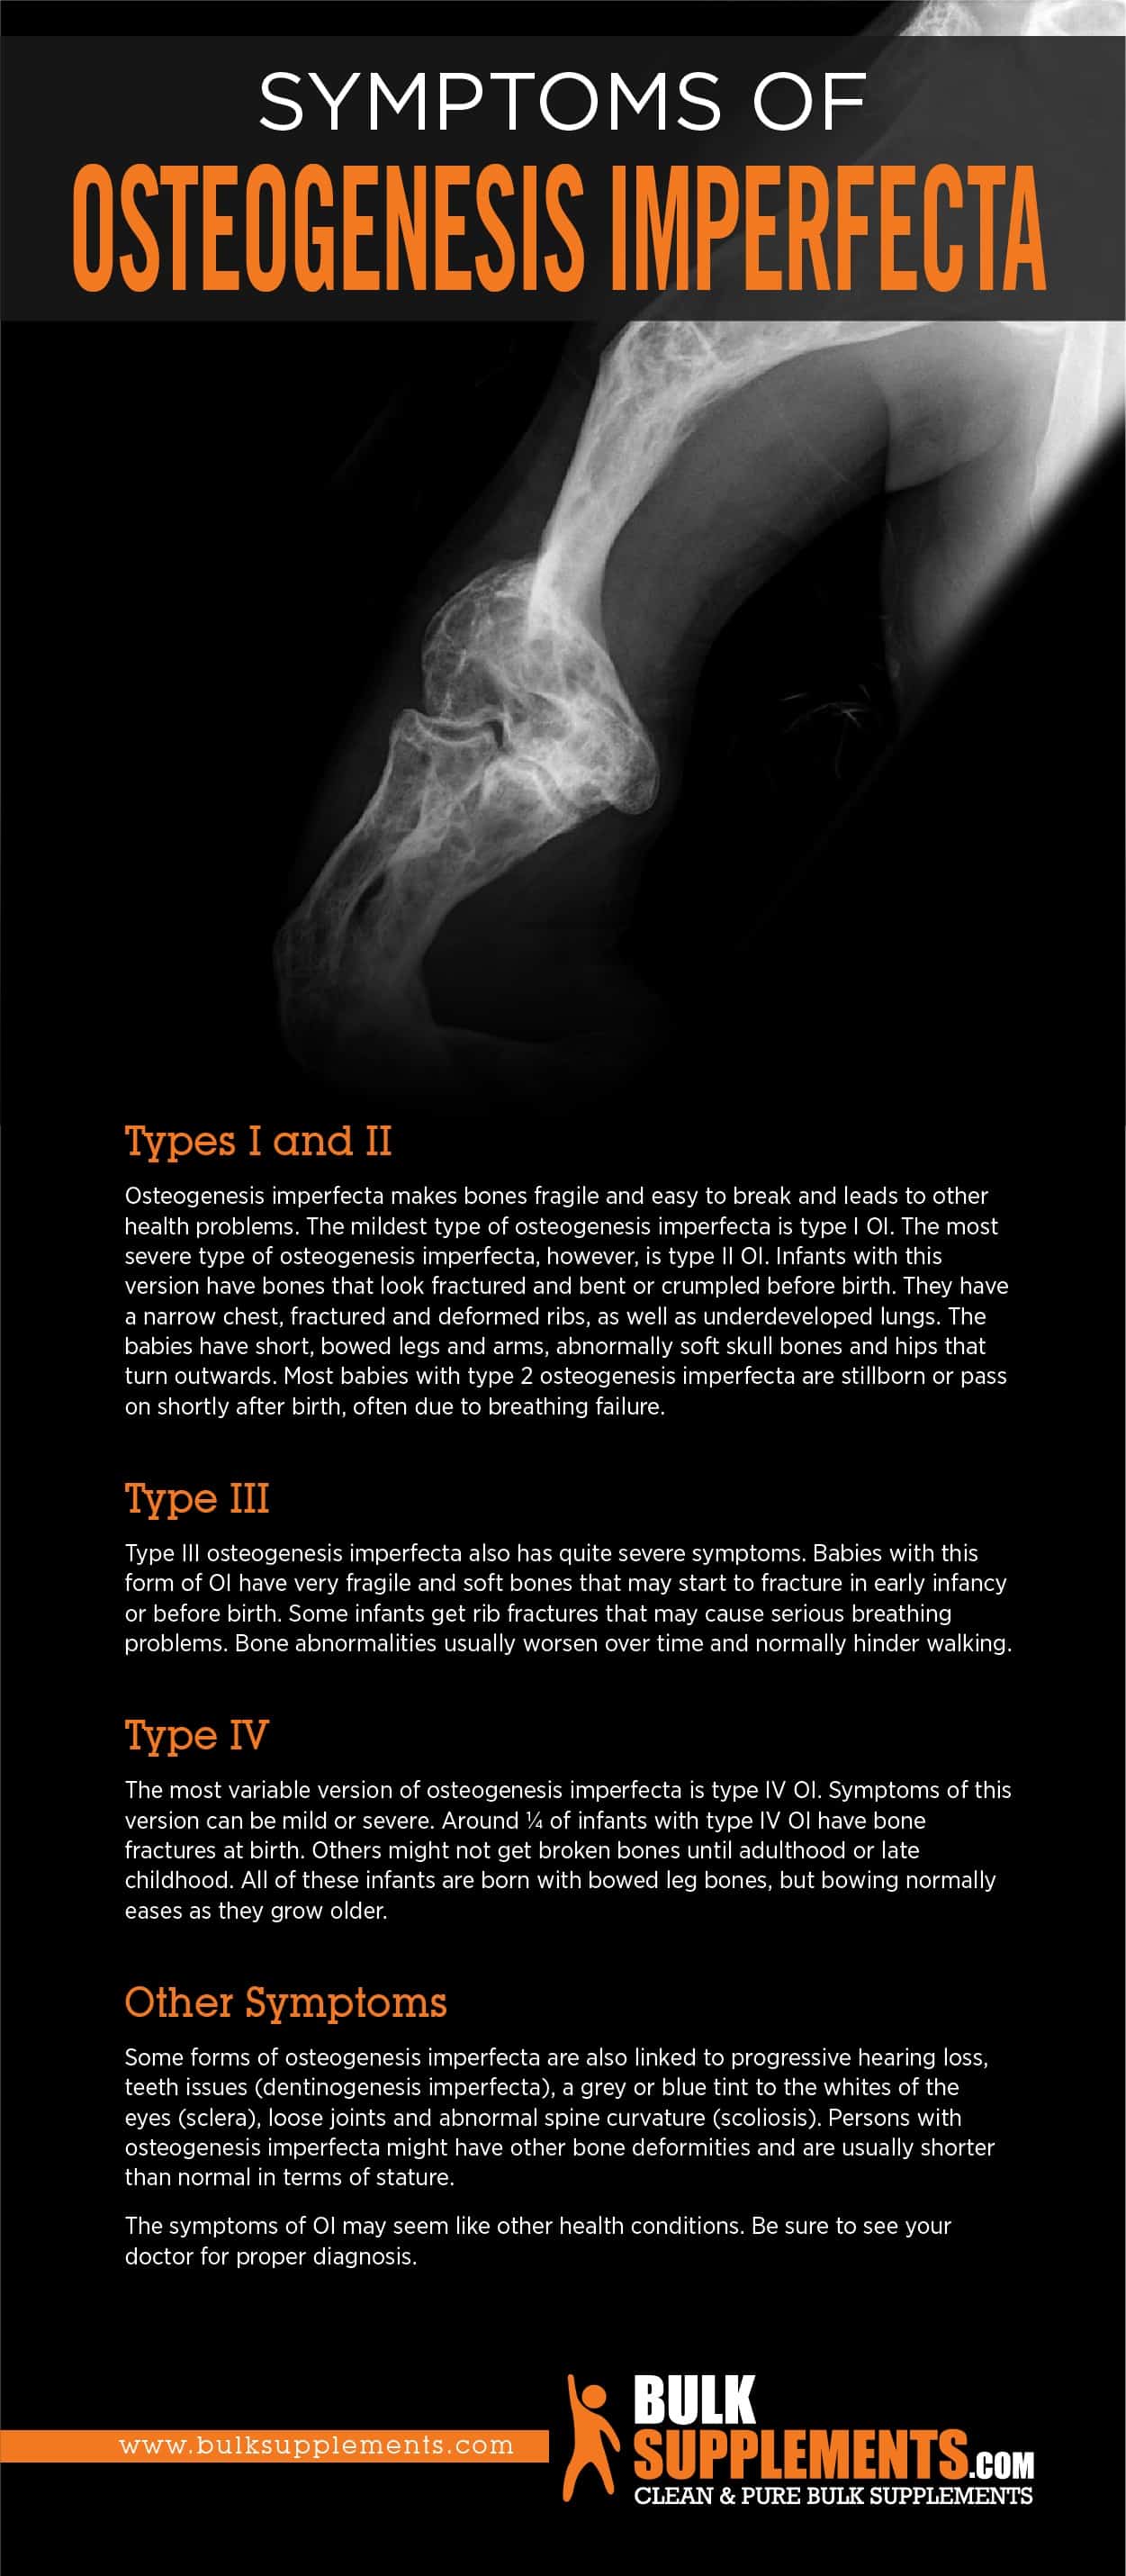 Symptoms of Osteogenesis Imperfecta